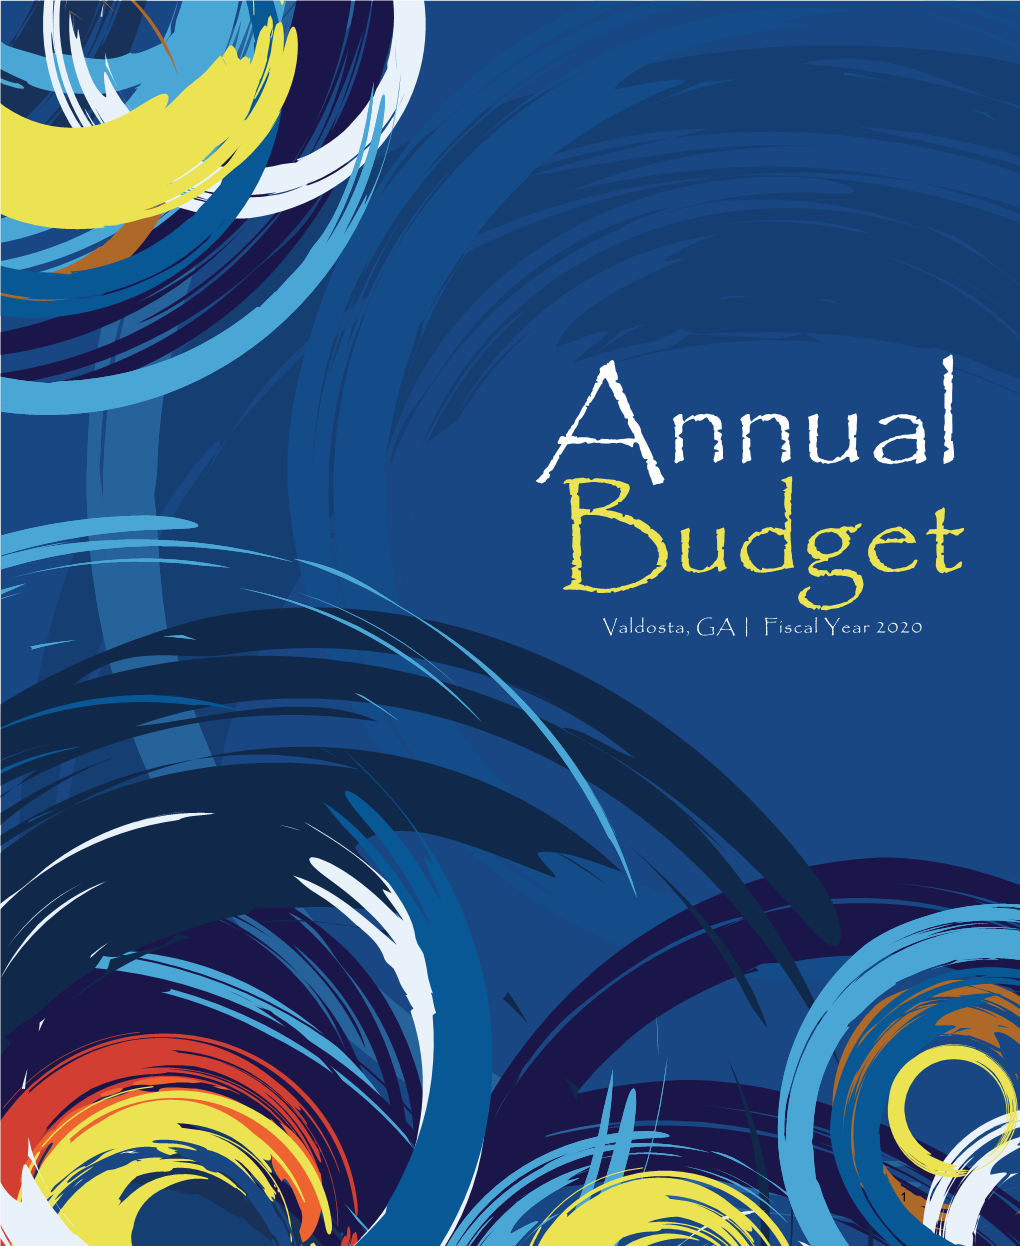 Budget Valdosta, GA | Fiscal Year 2020